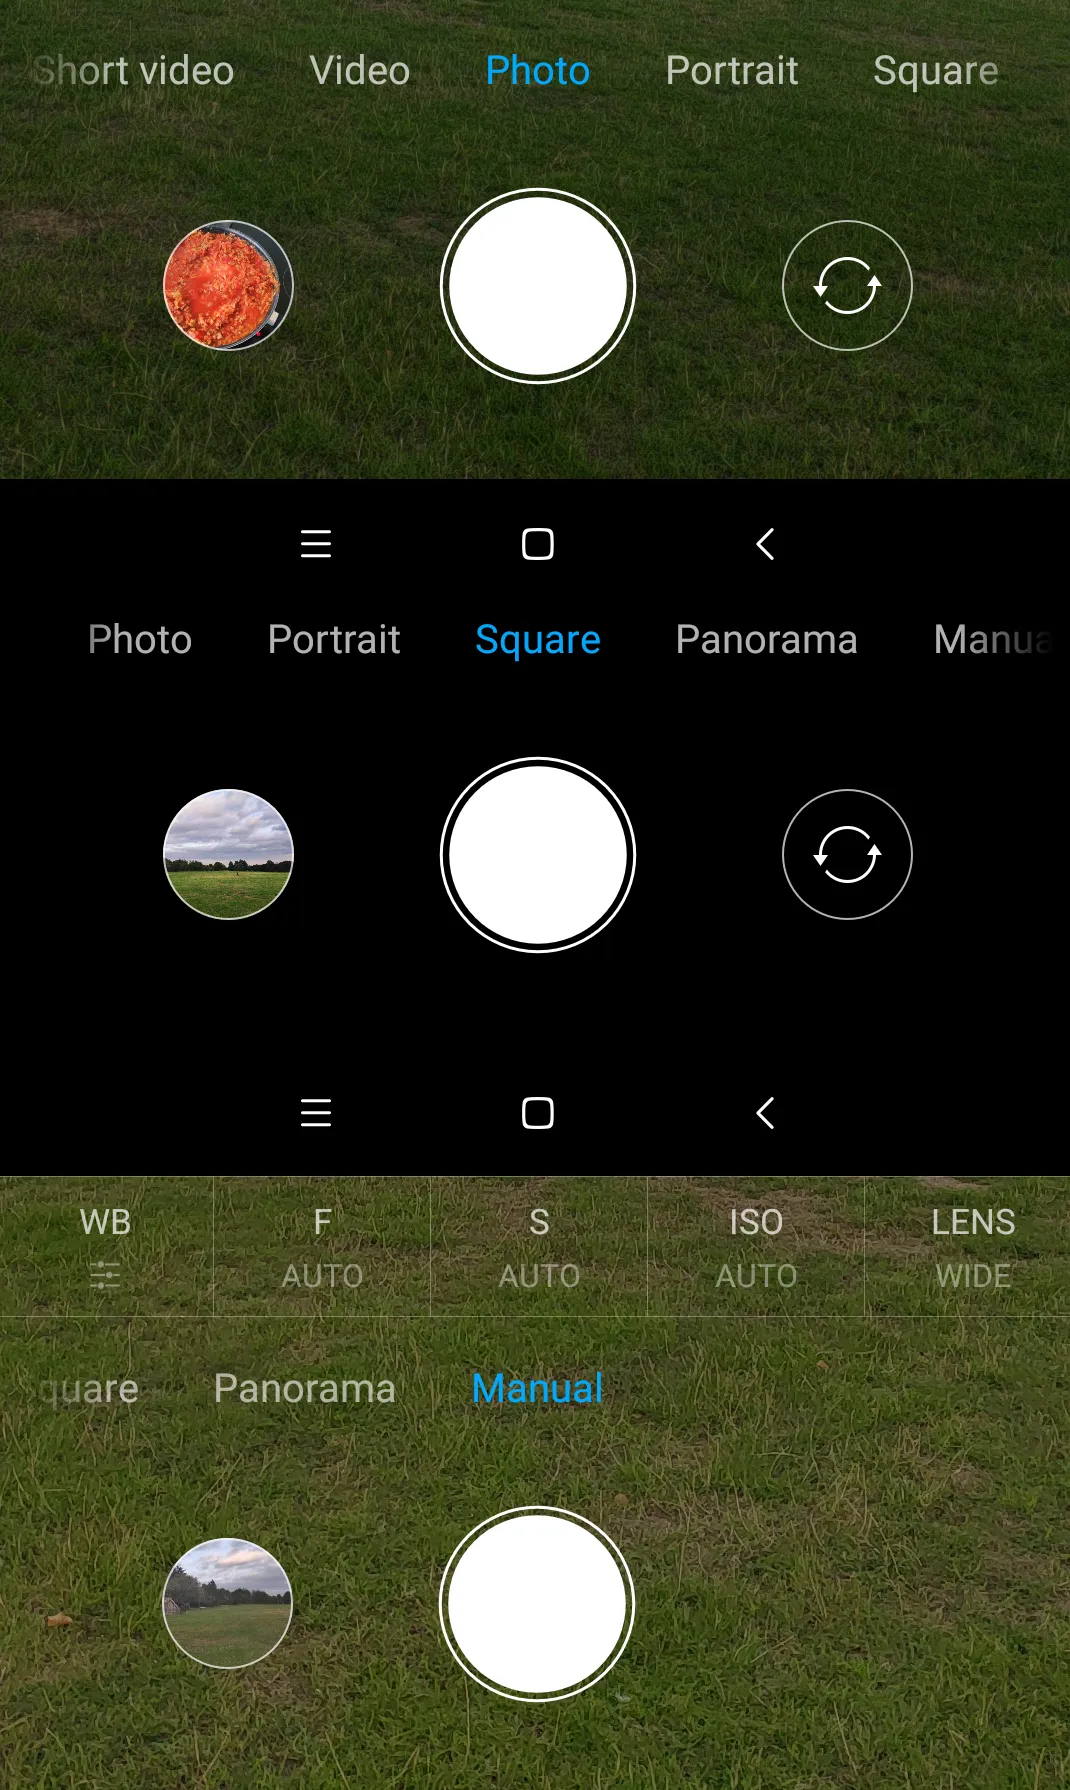 Xiaomi Mi 8 (Global version) main photo options